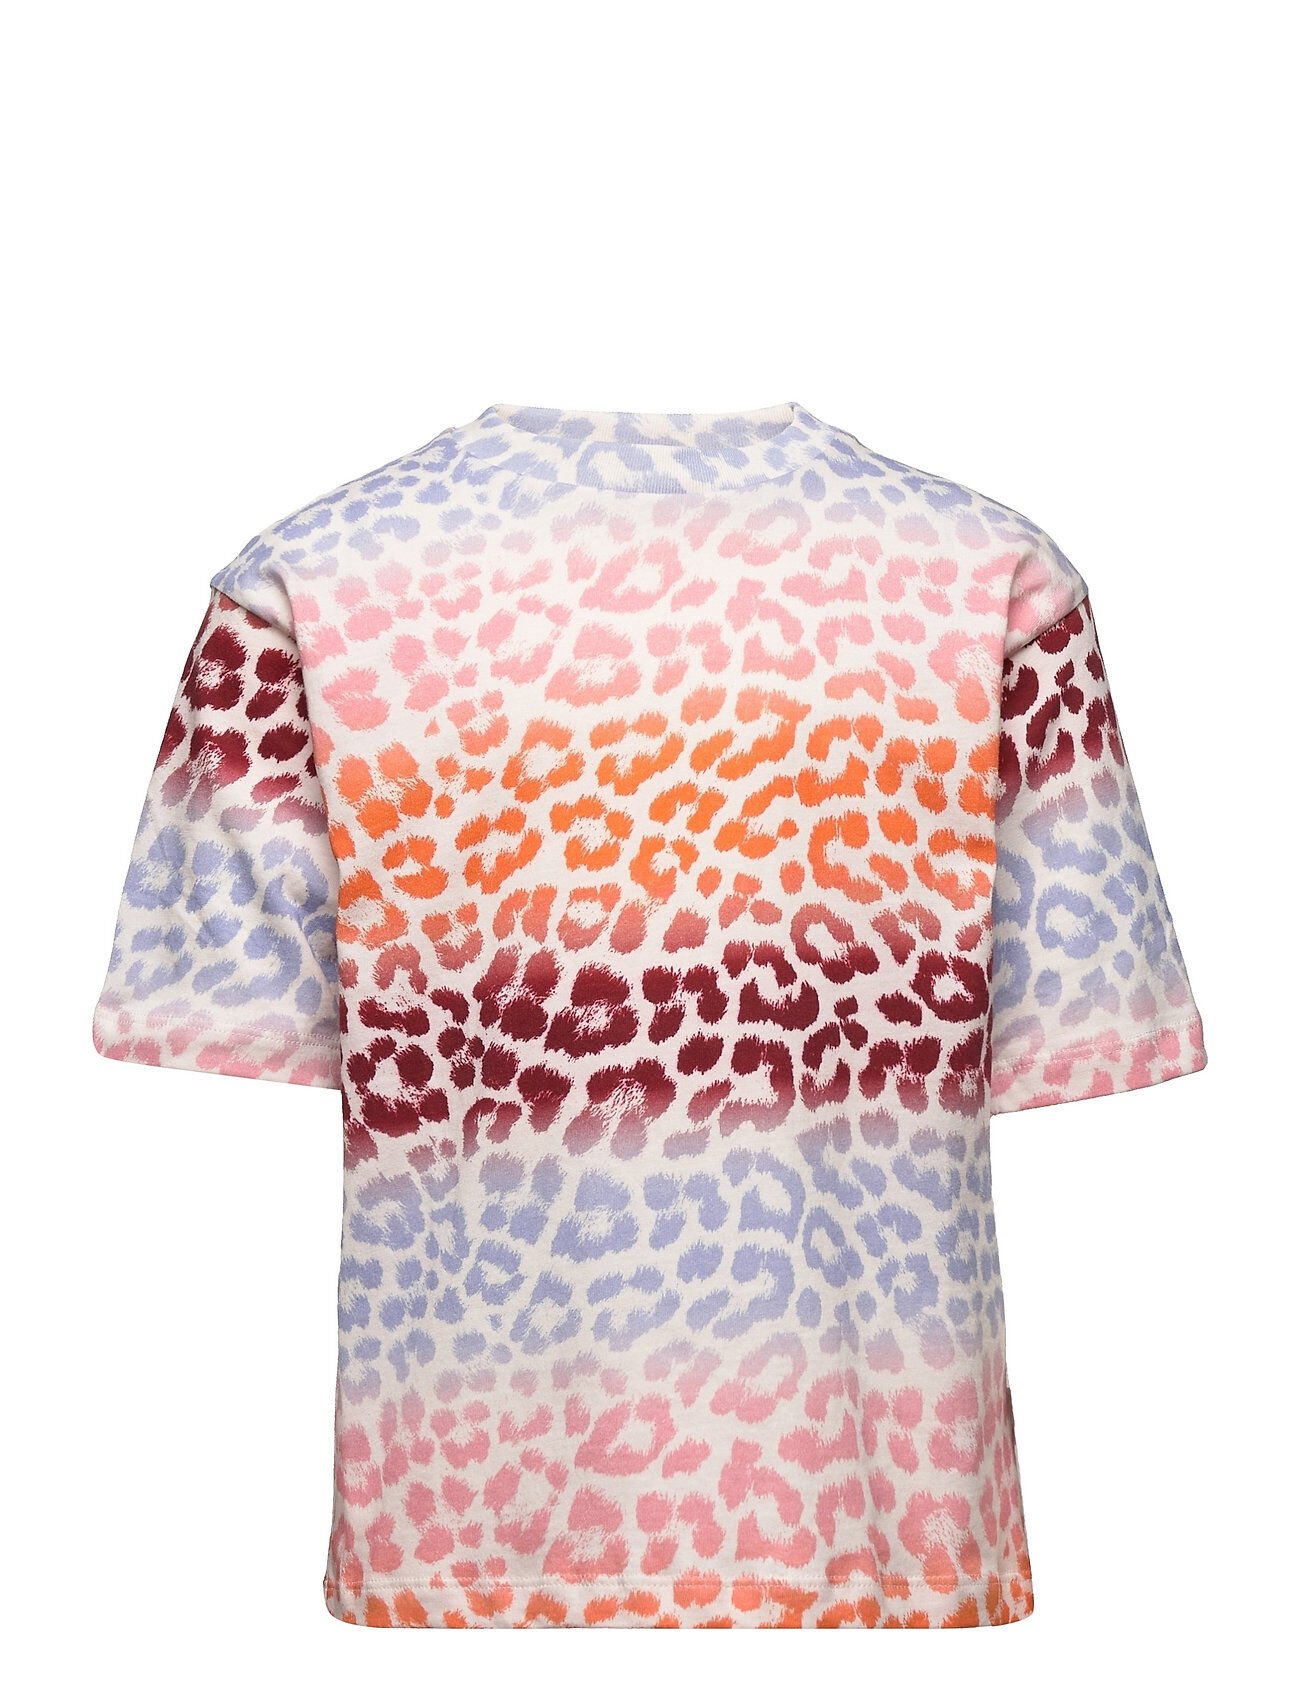 Molo Reen T-shirts Short-sleeved Multi/mønstret Molo